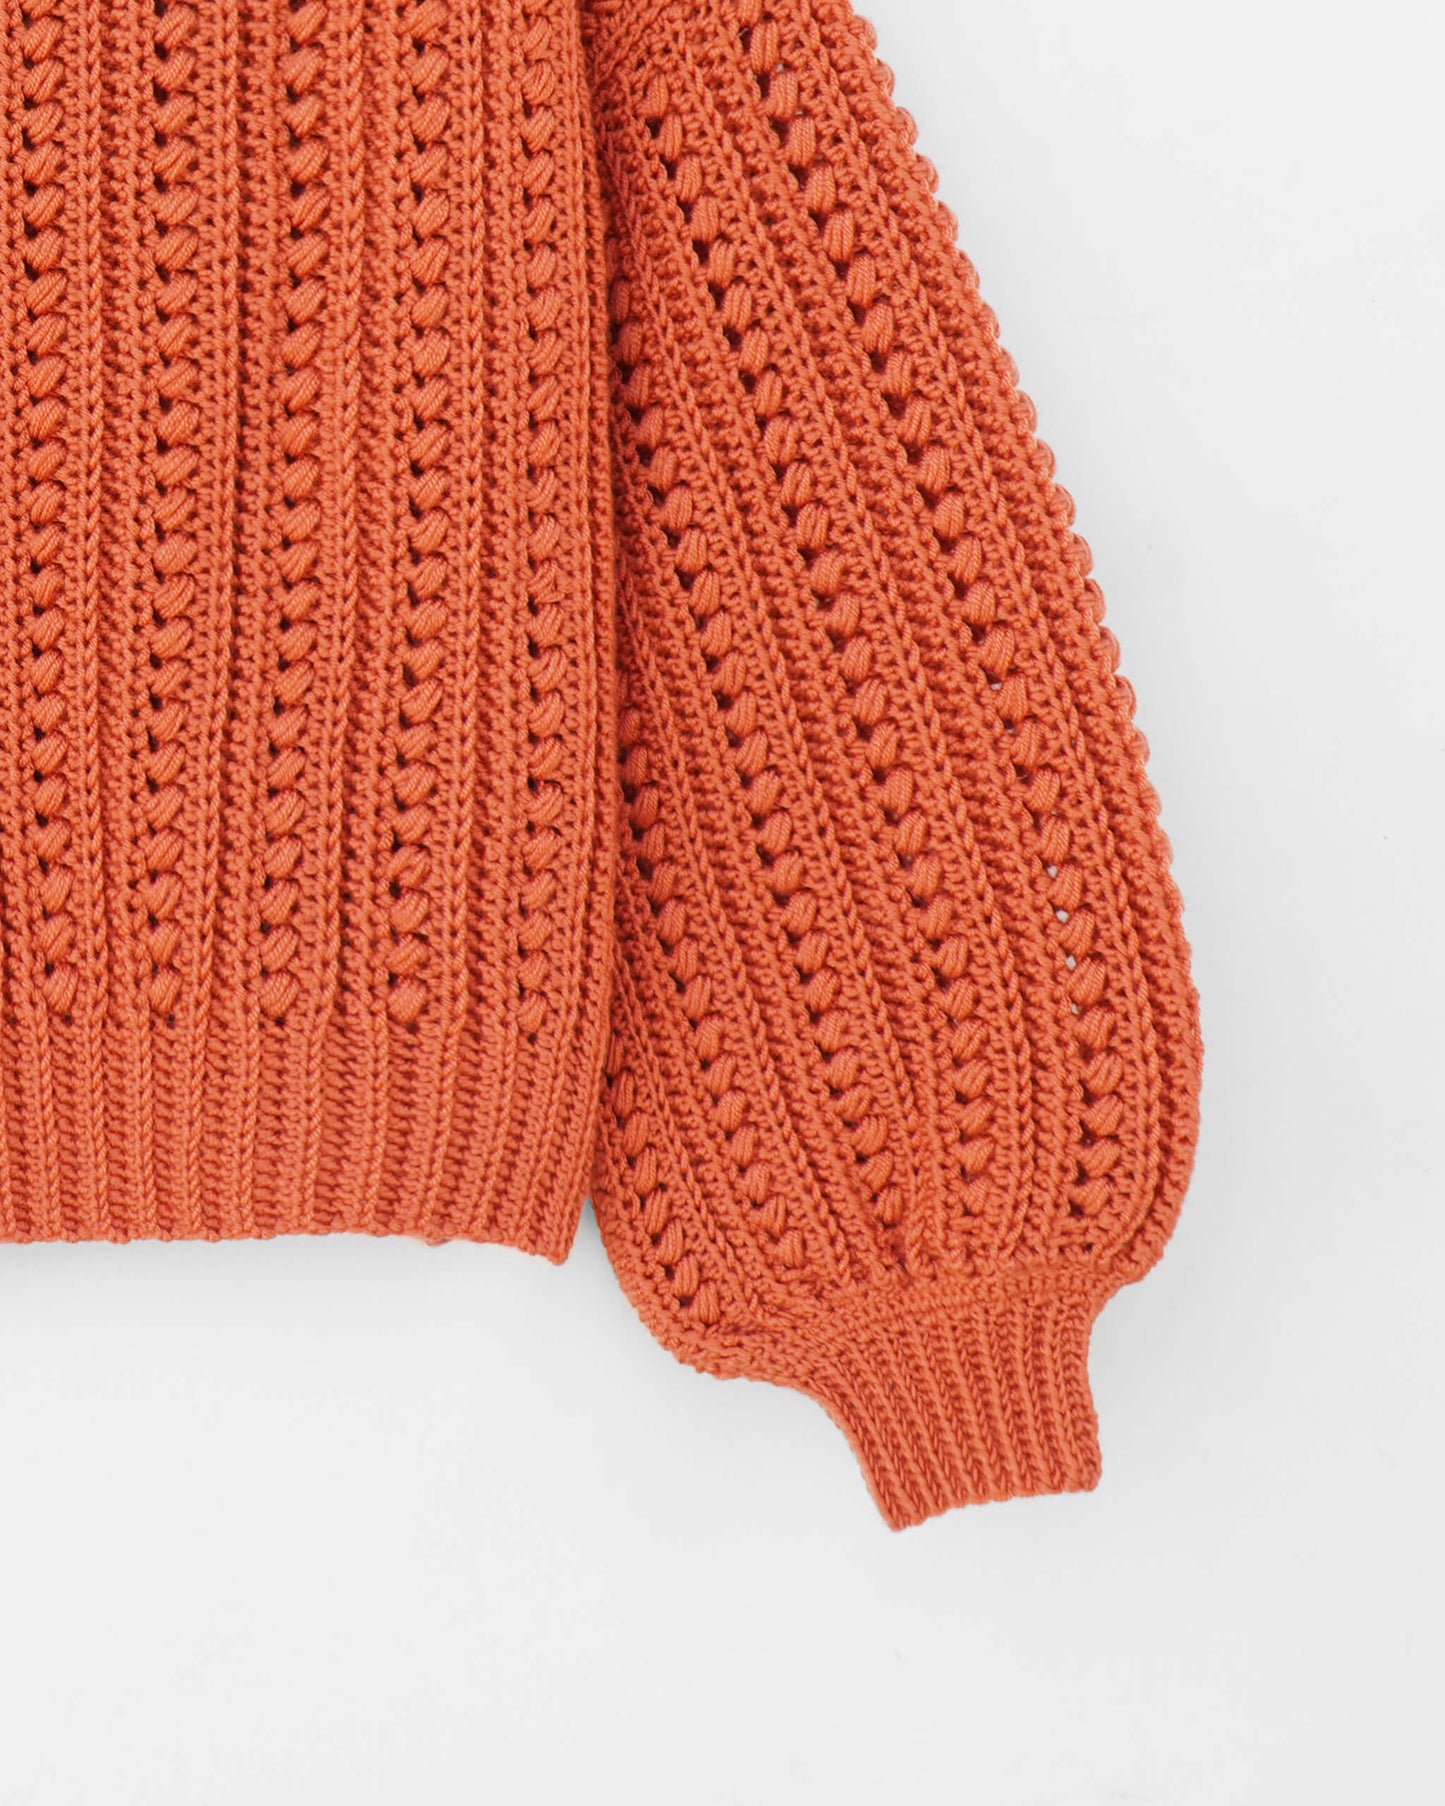 Sweater No.39 | Ribbed sweater crochet pattern